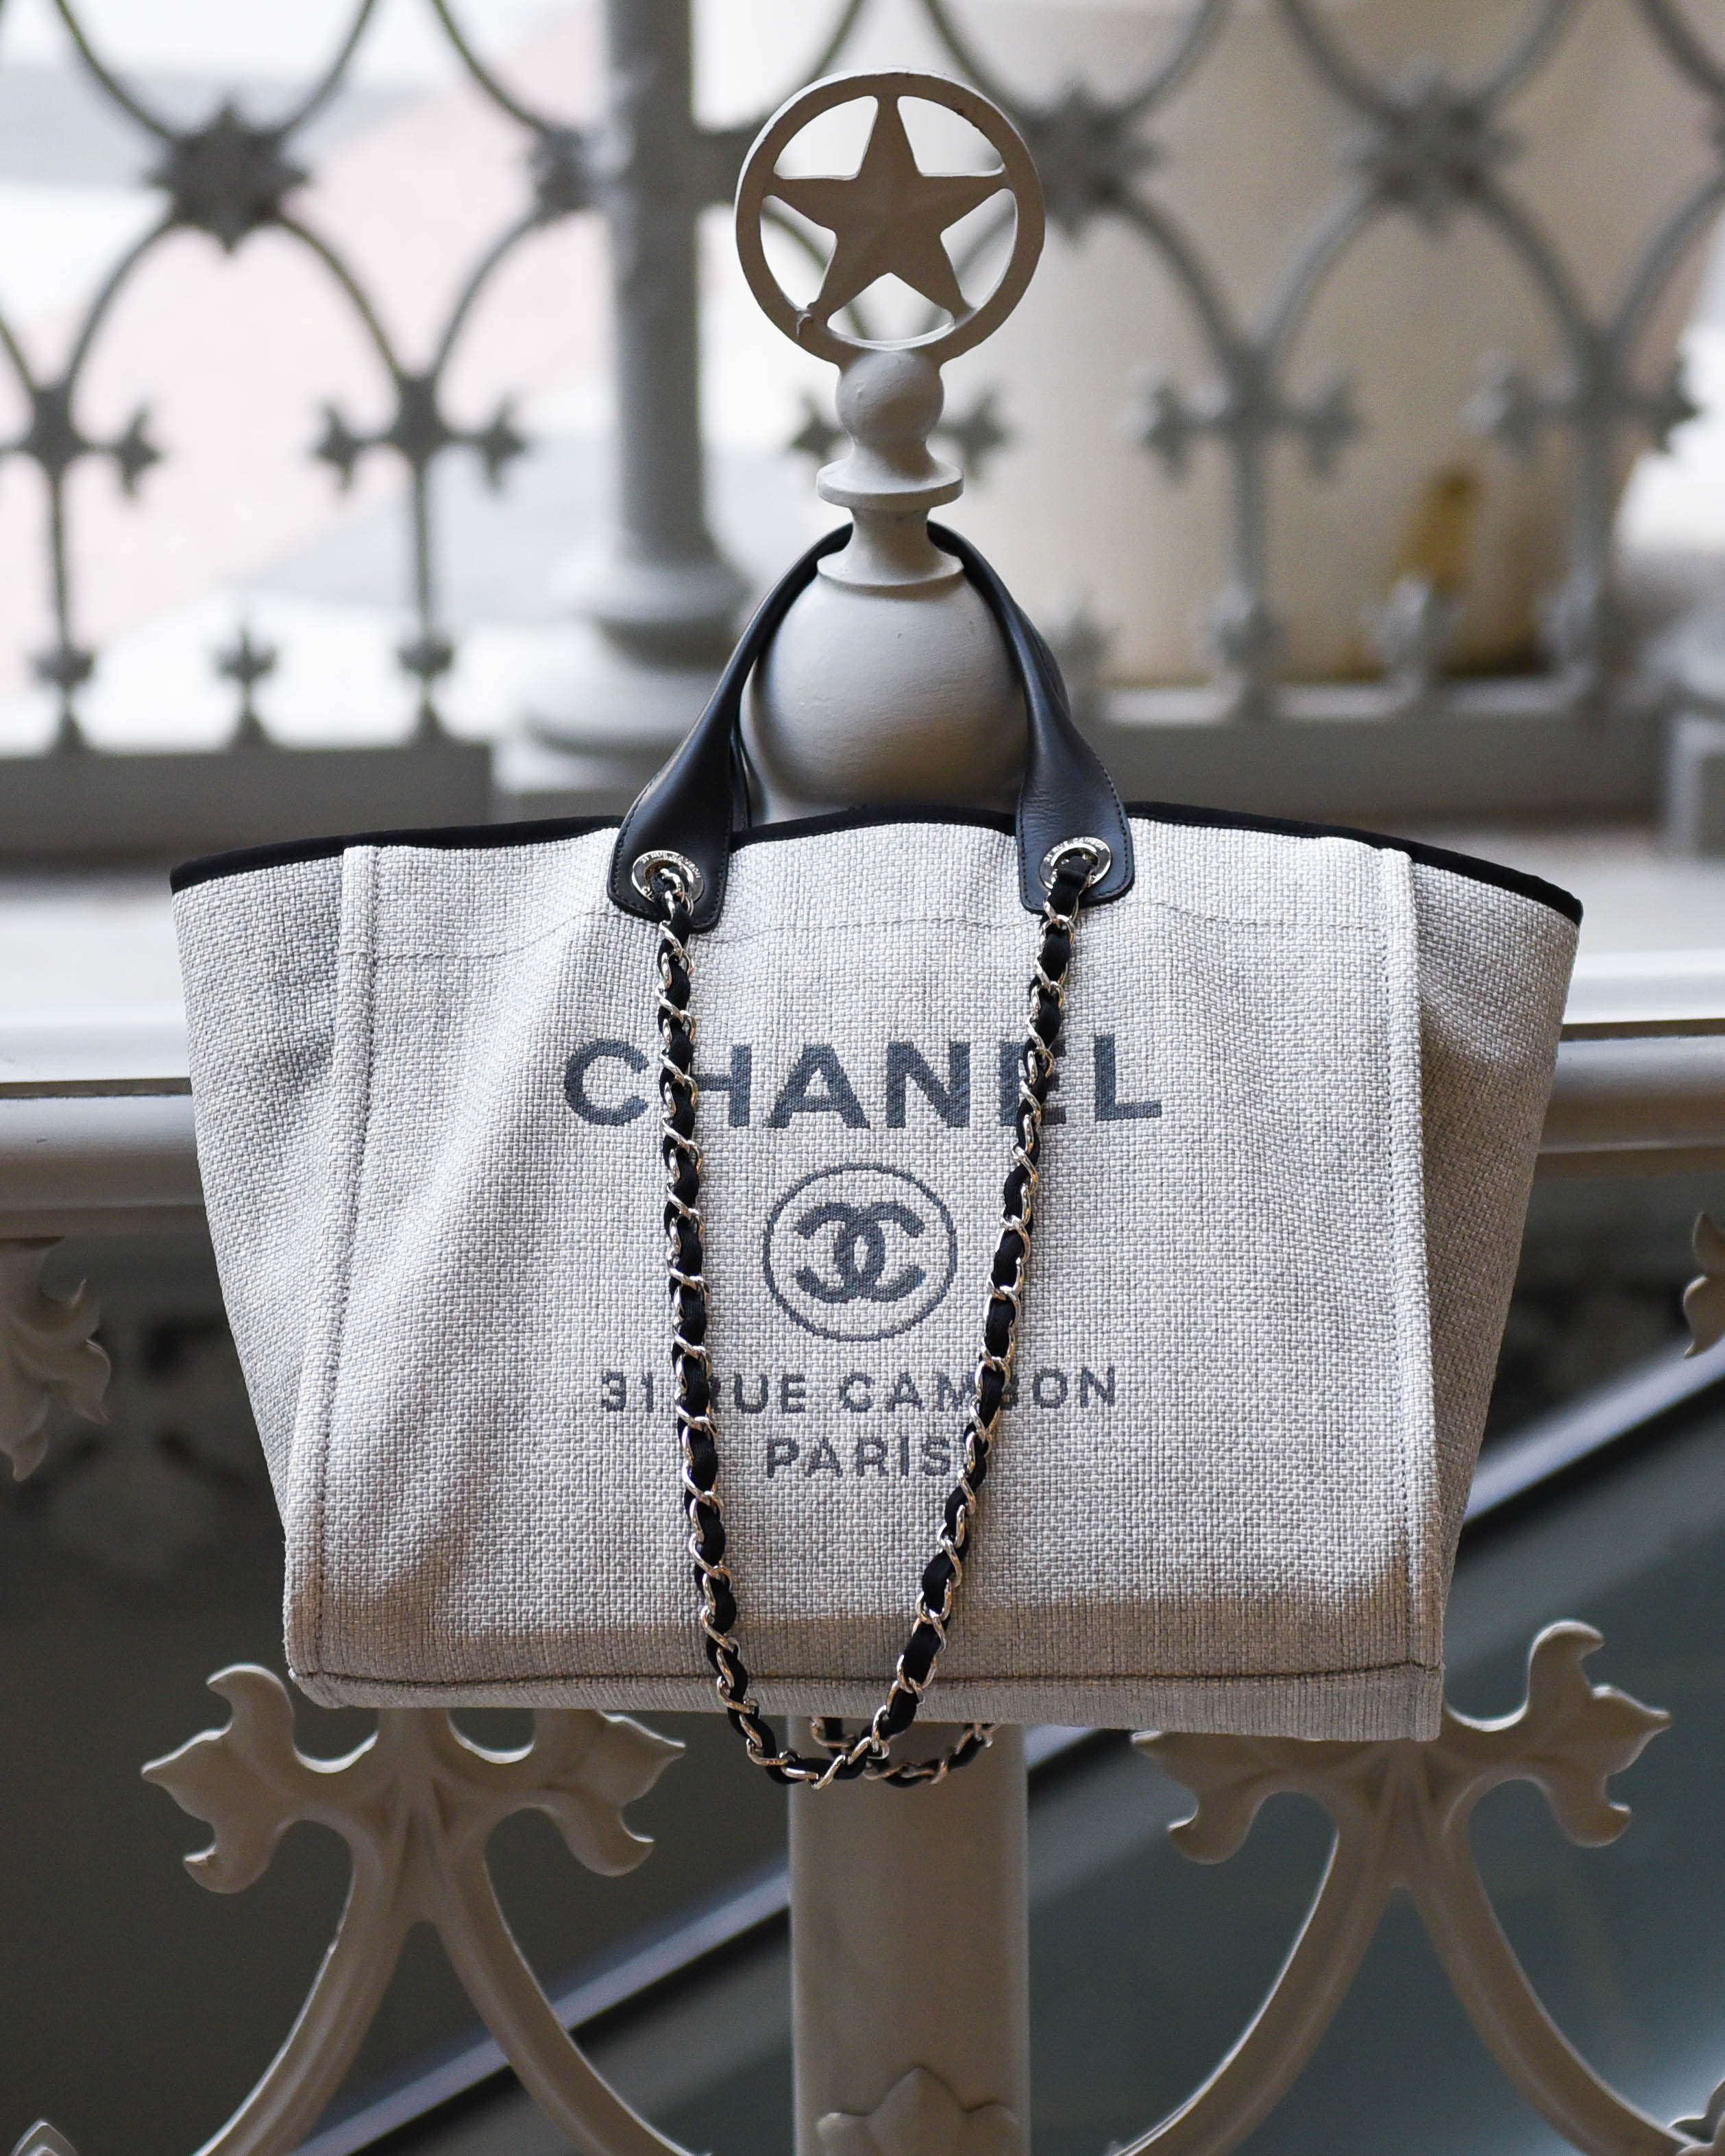 lo-murphy-ebay-authenticate-designer-handbag-chanel-shopping-bag-chanel-tote-ebay-luxury-bags-diaper-bag-dallas-blogger-5